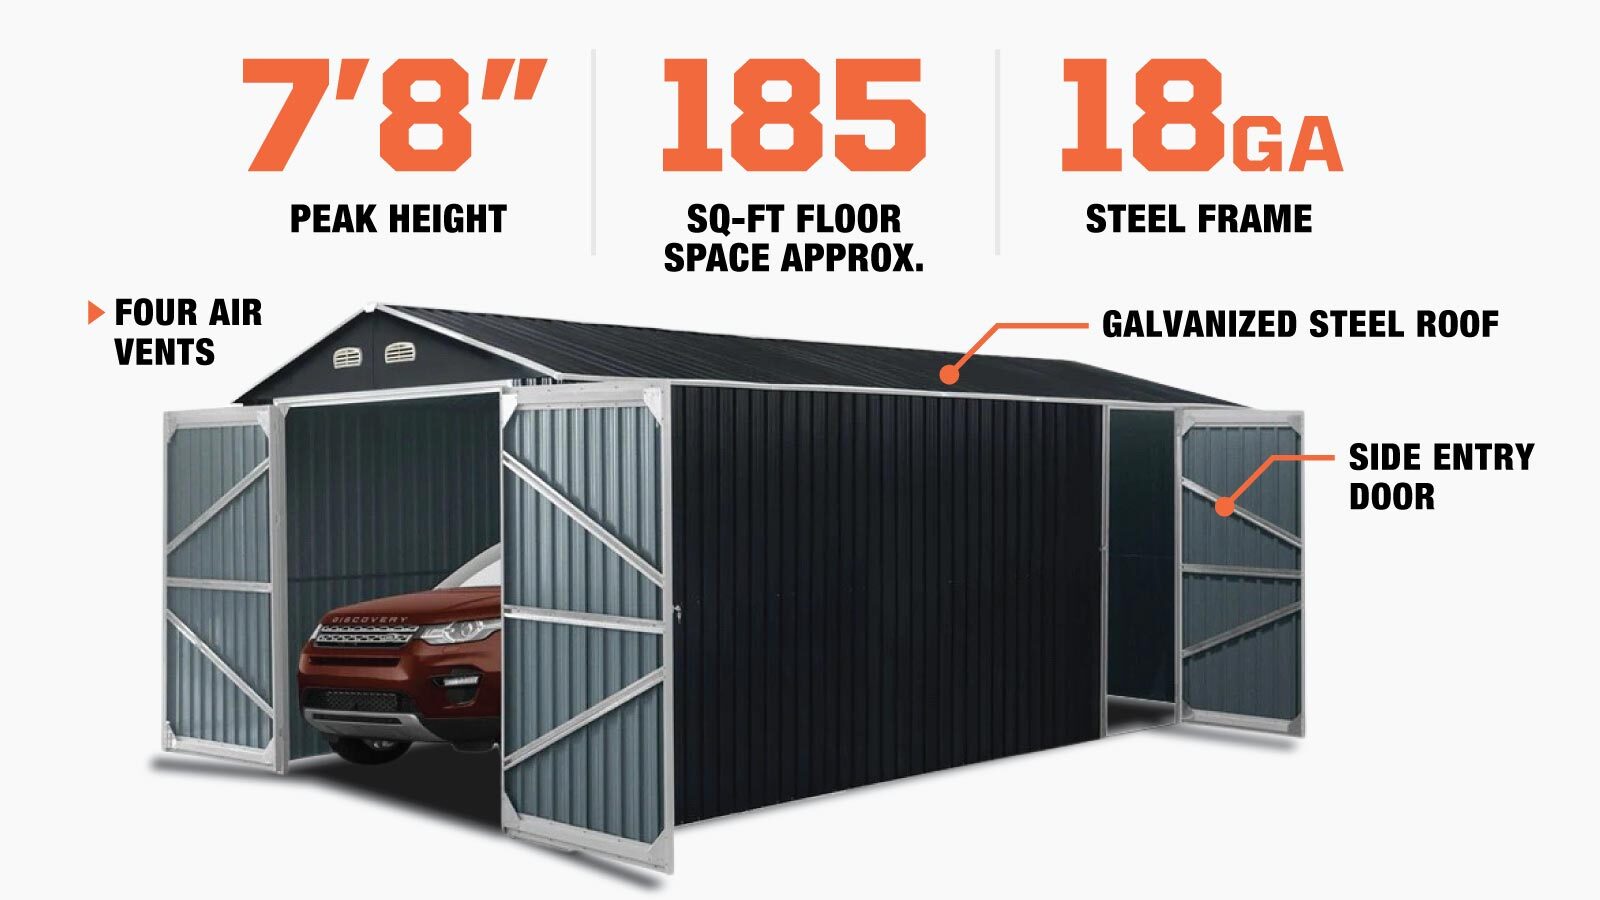 TMG Industrial 10’ x 20’ Metal Garage Shed with Double Front Doors, 7’8” Peak Height, Side Entry Door, 185 Sq-Ft Floor Space, TMG-MS1020A-description-image